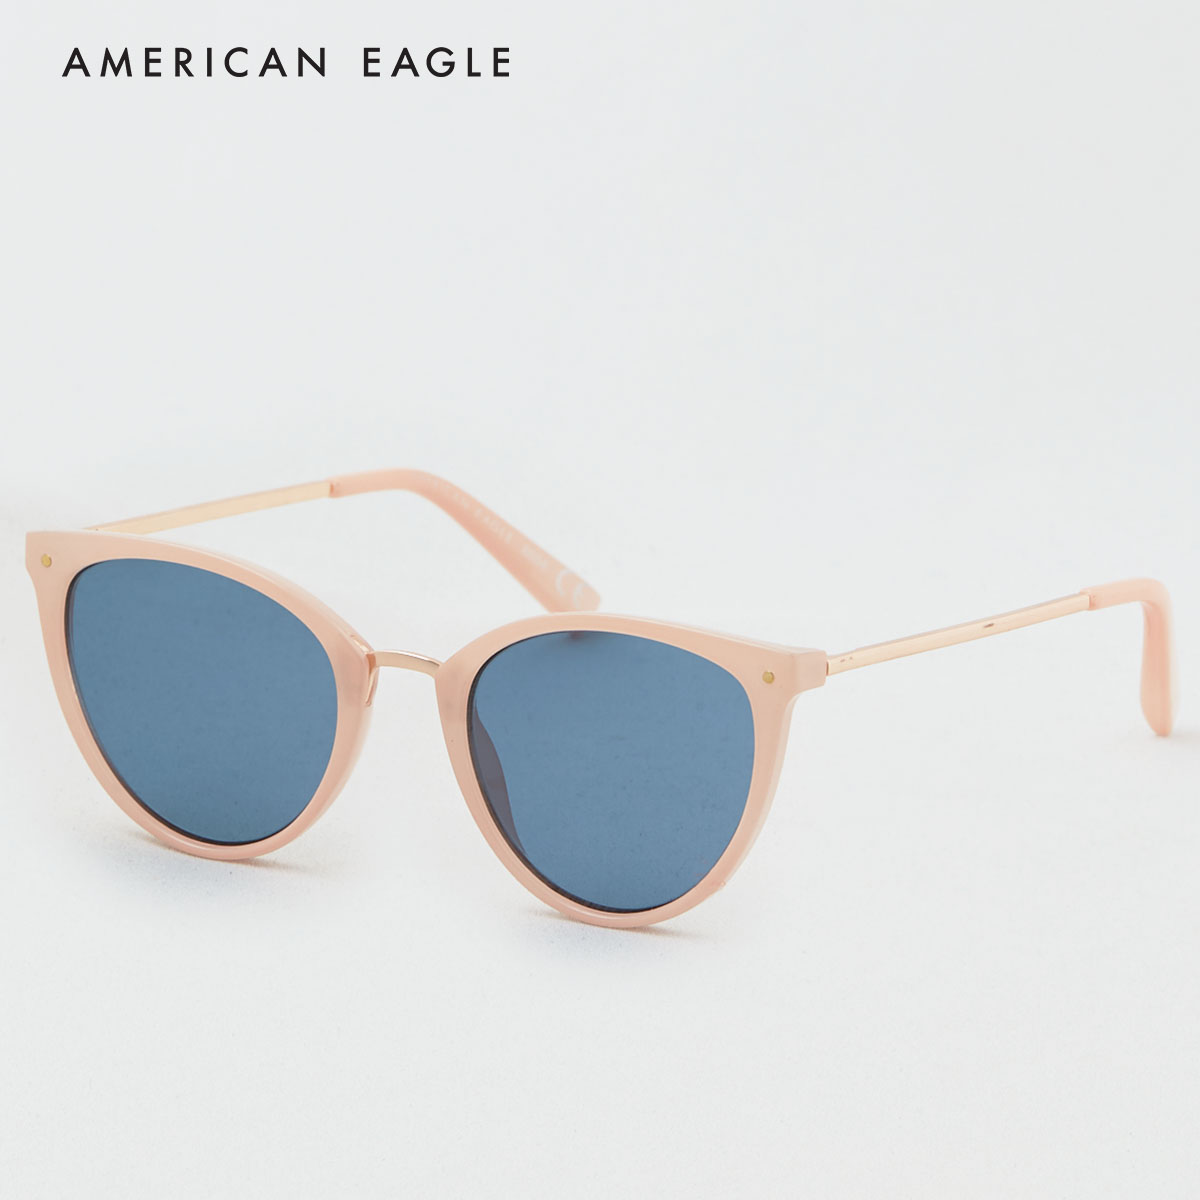 American Eagle Blush Clubmaster Sunglasses แว่นตา ผู้หญิง แฟชั่น(048-8604-107)